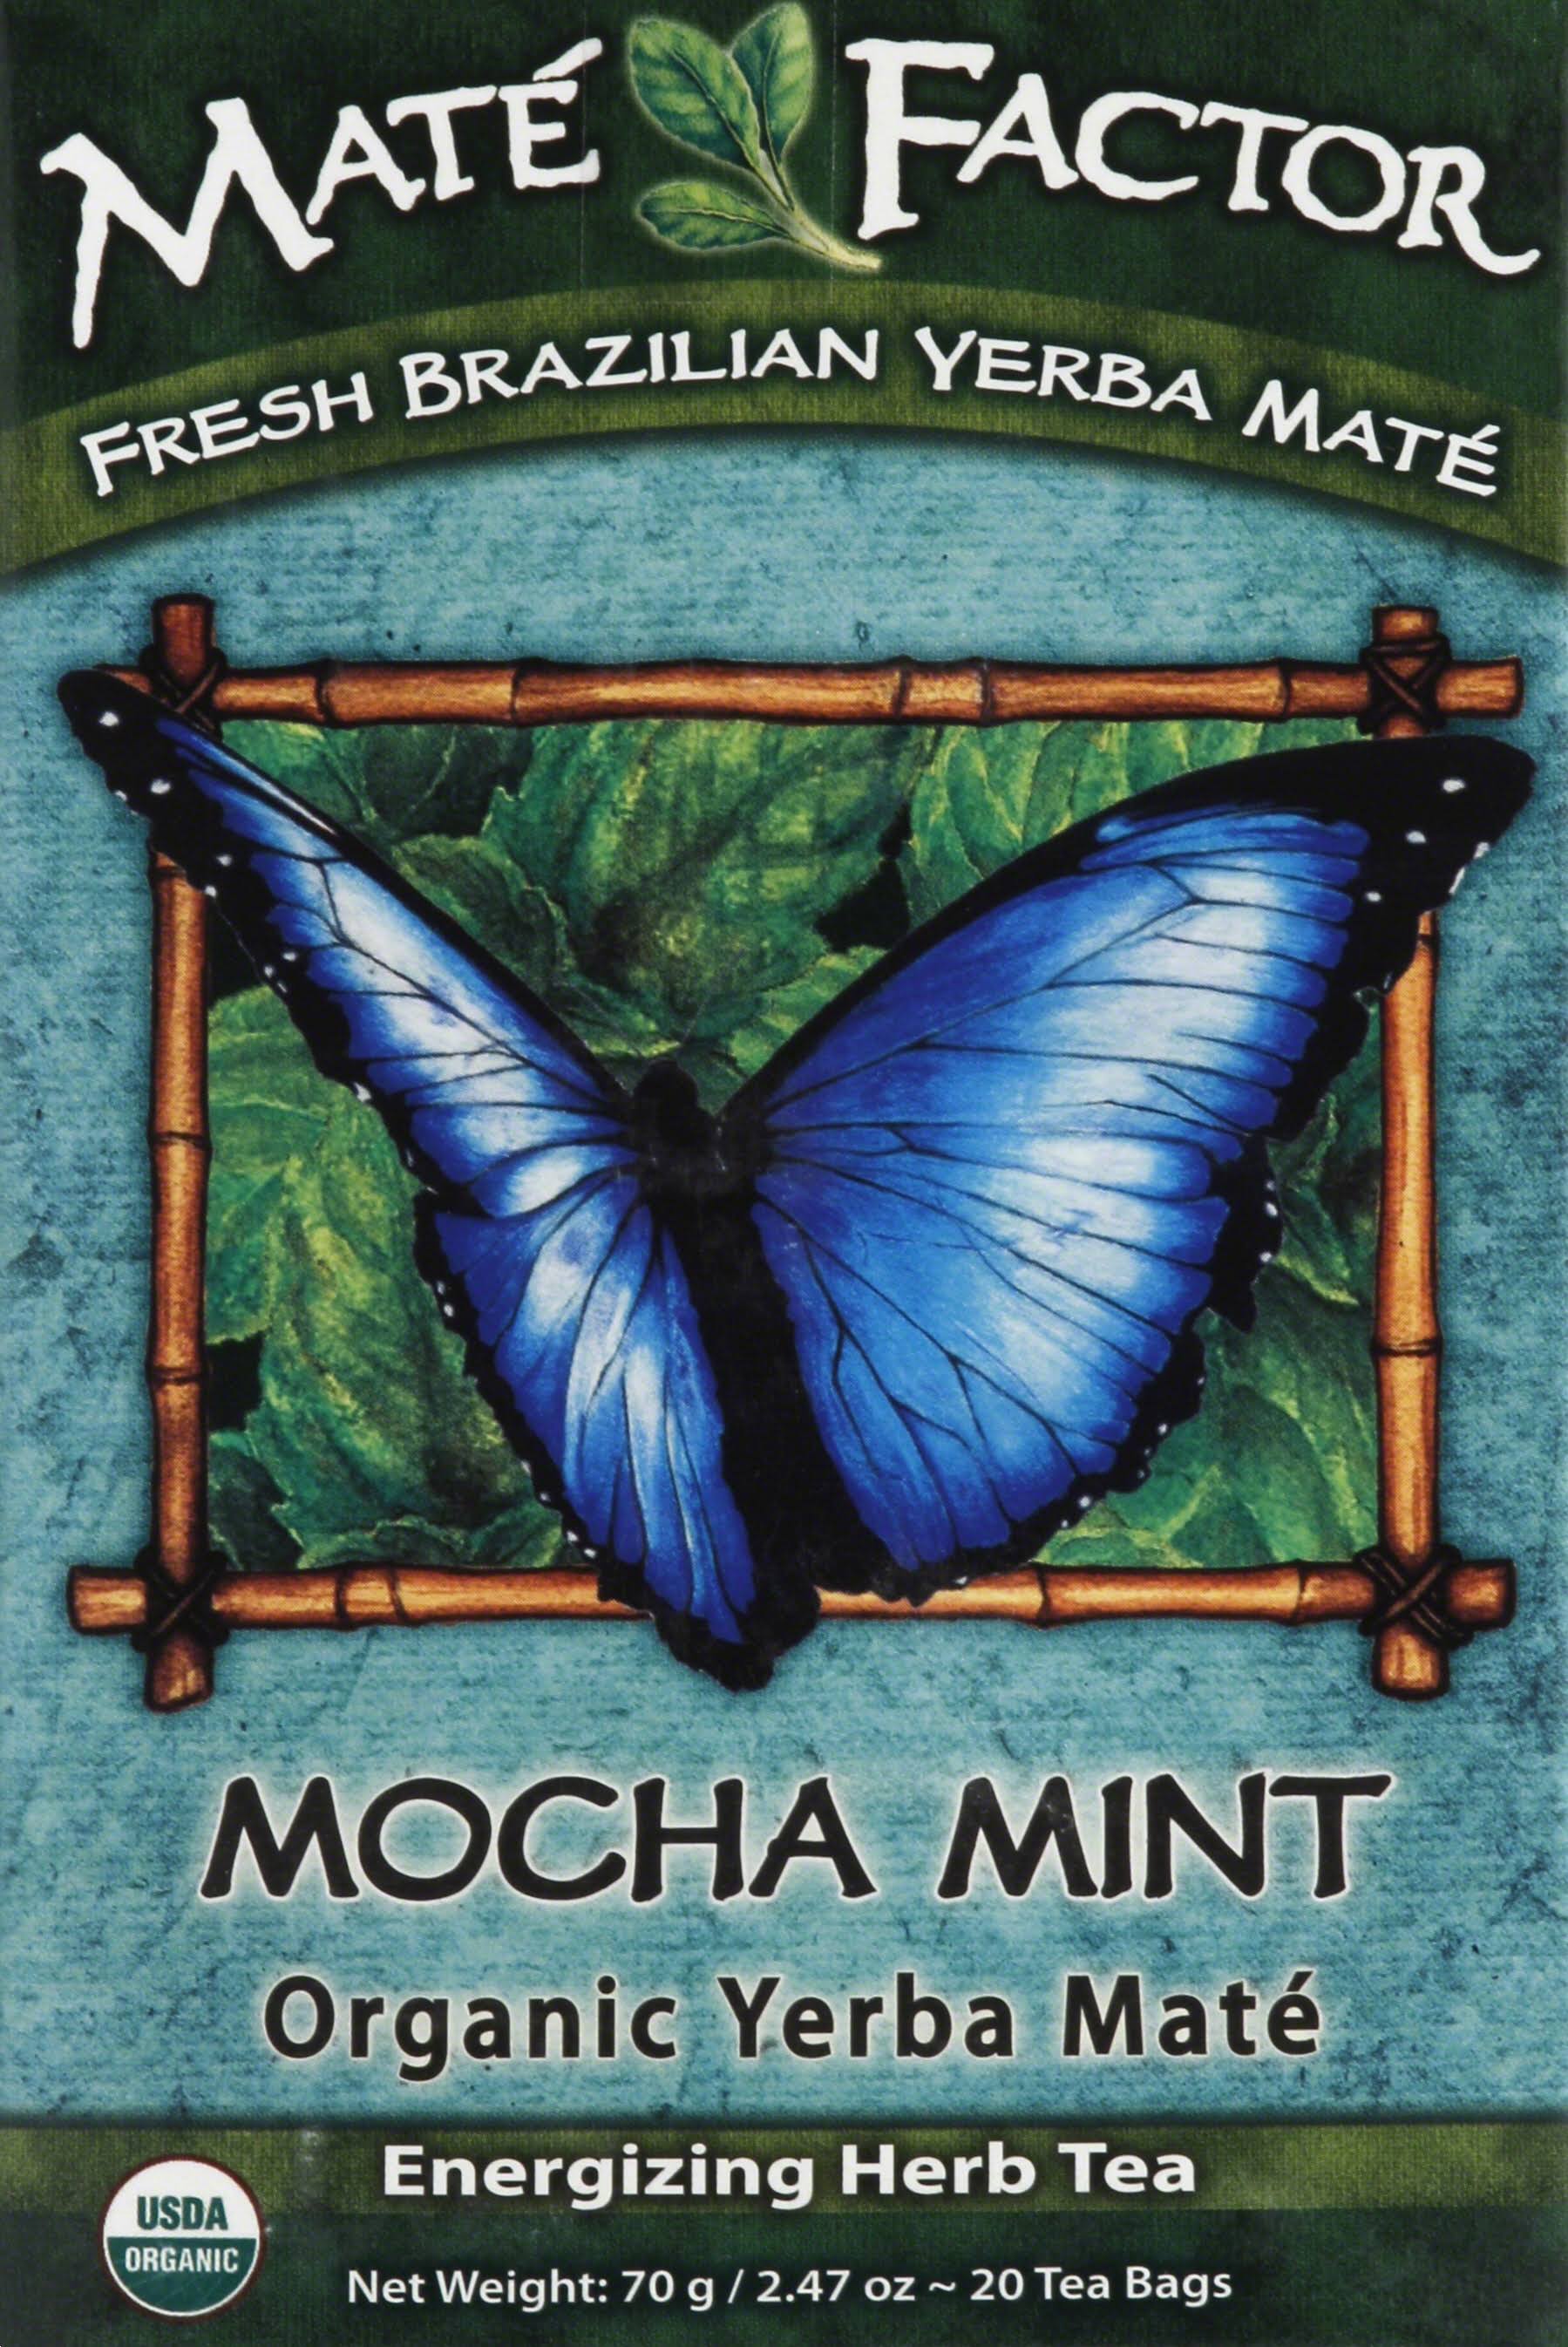 The Mate Factor Yerba Mate Energising Herb Tea - Mocha Mint, 20 Tea Bag